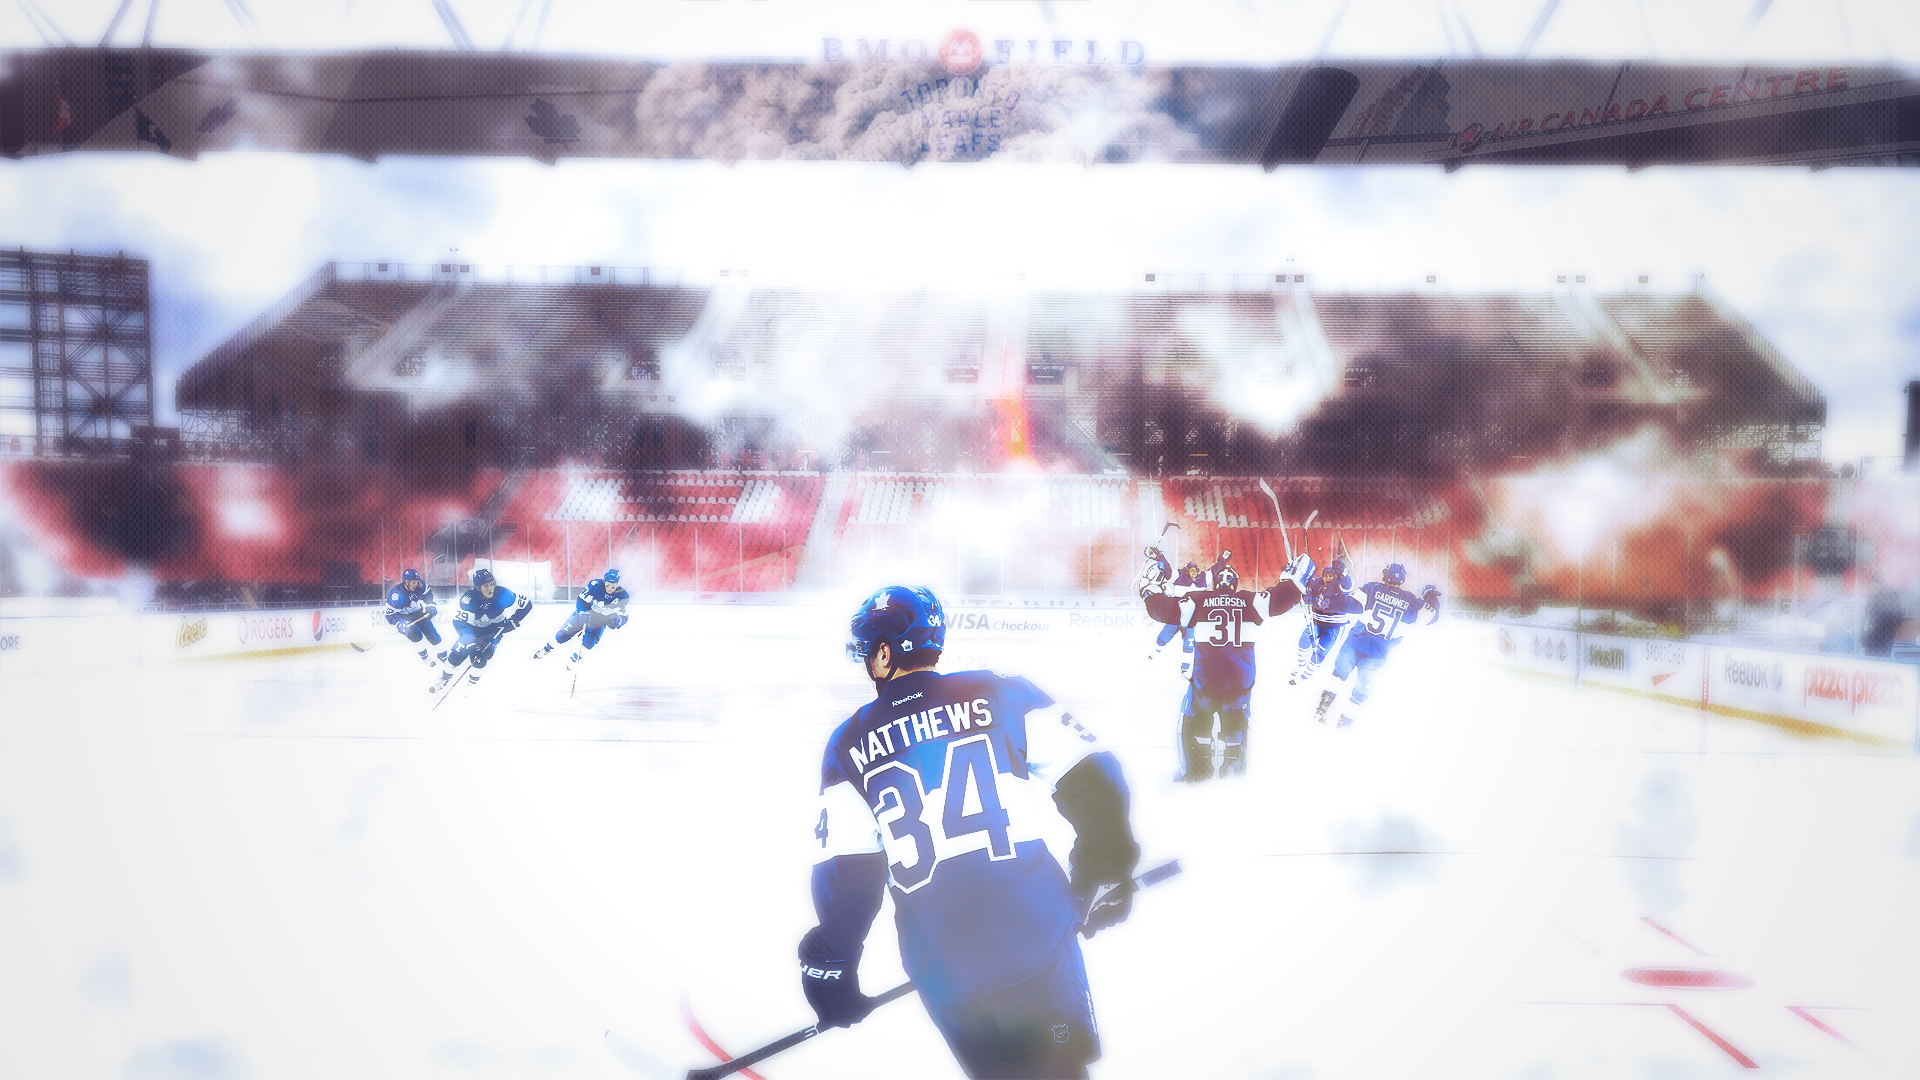 Toronto Maple Leafs Retro Ice by bbboz on DeviantArt